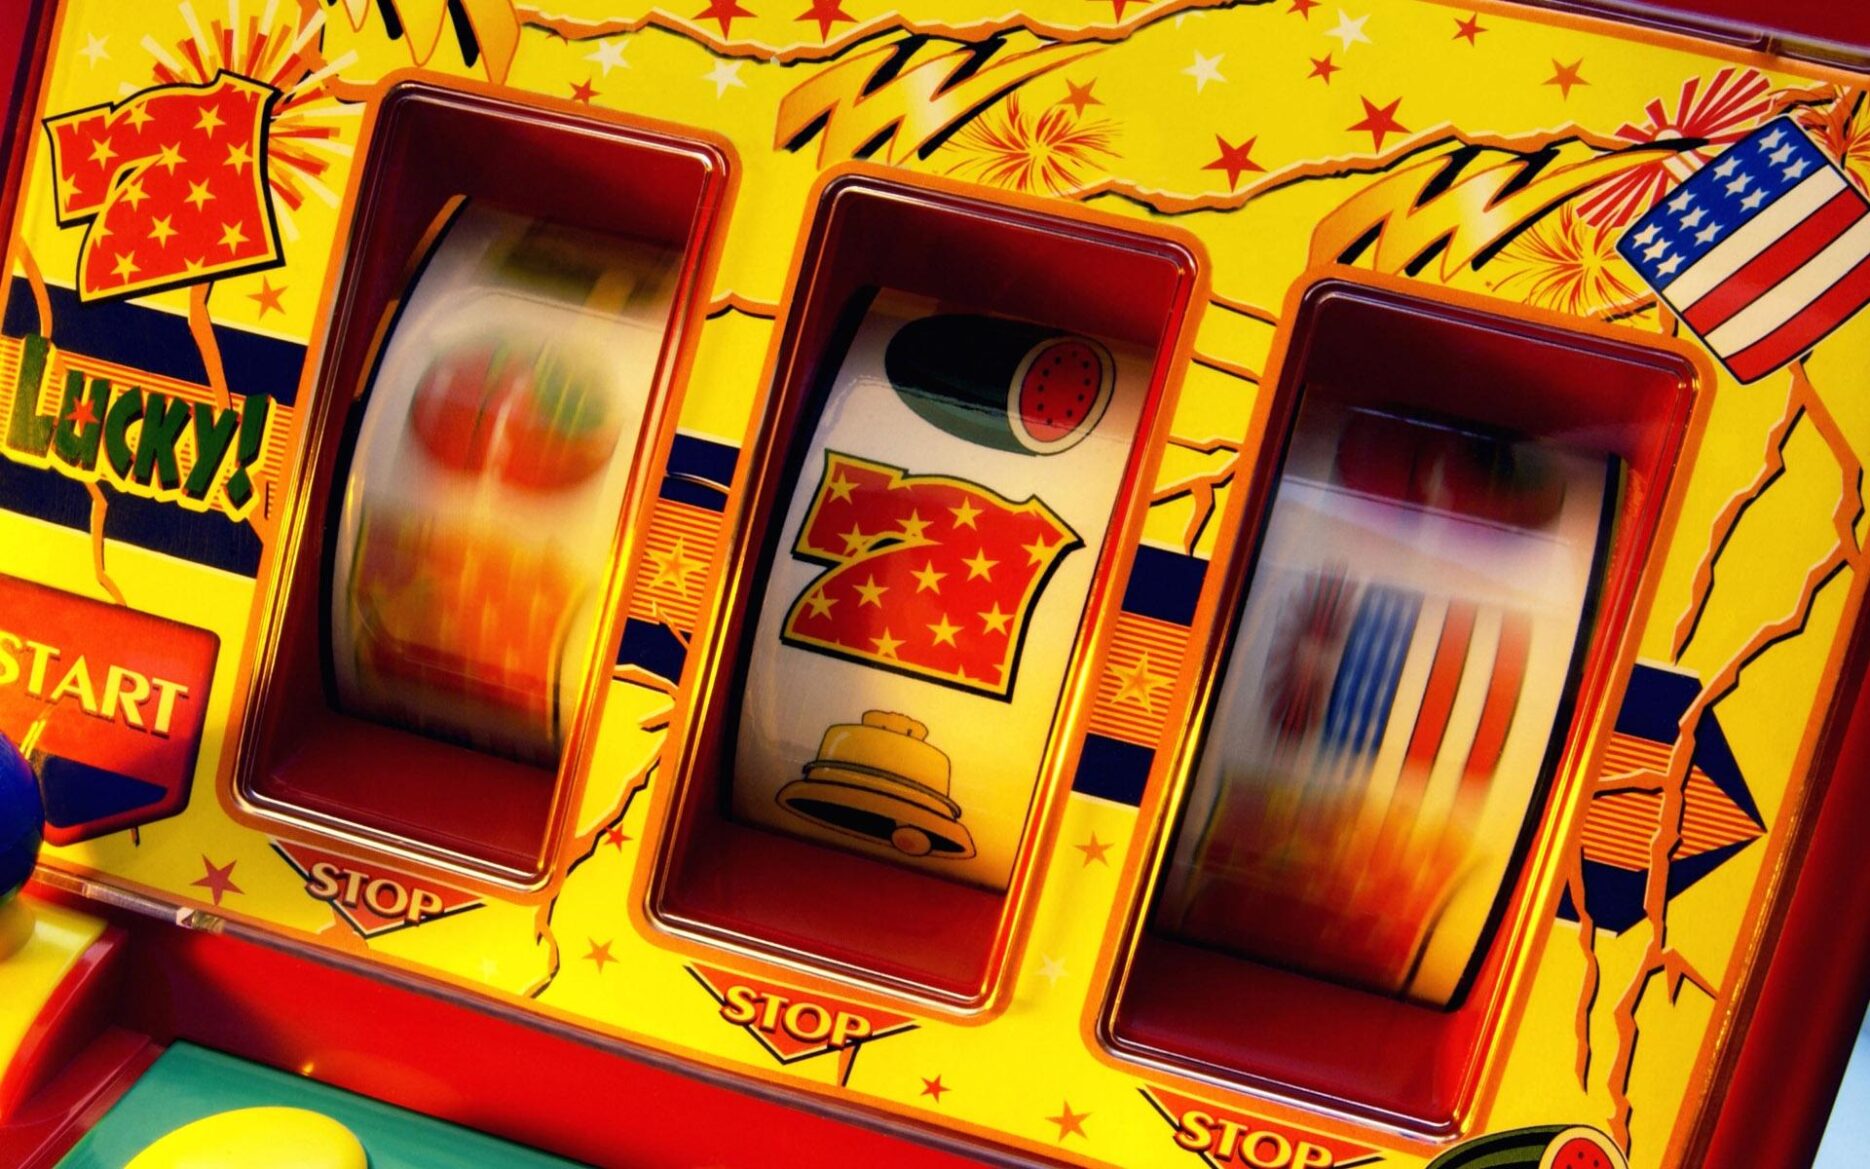 How Do Online Slot Machines Work?